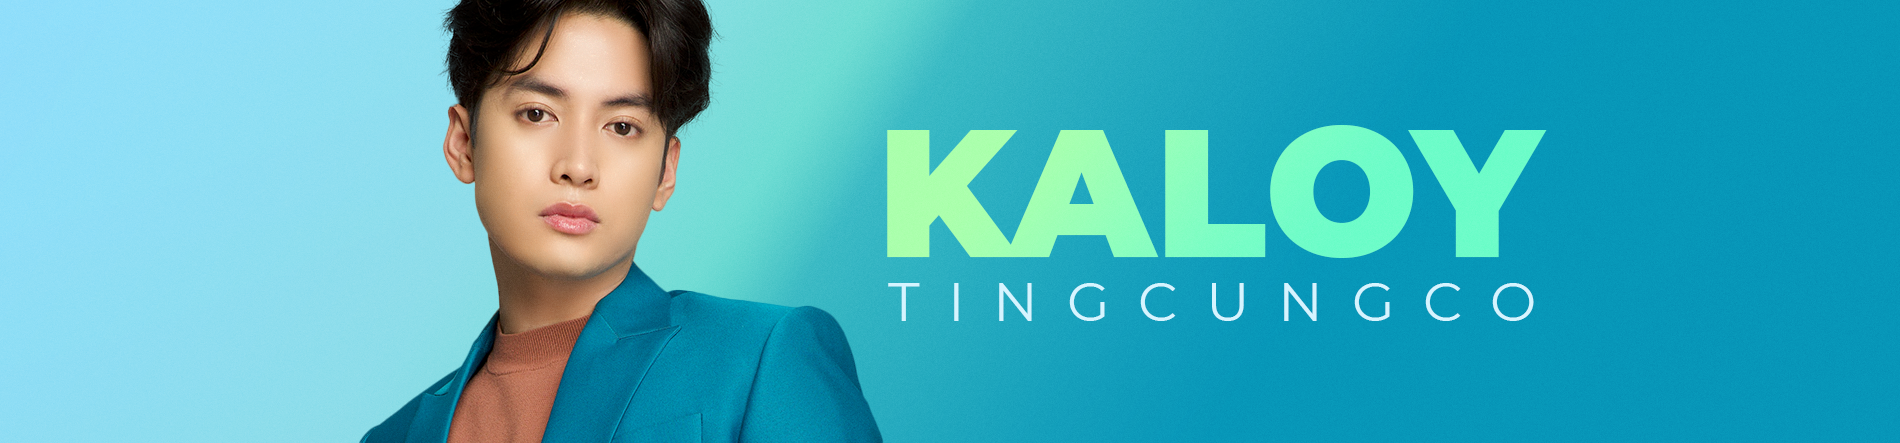 Kaloy Tingcungco Desktop Banner